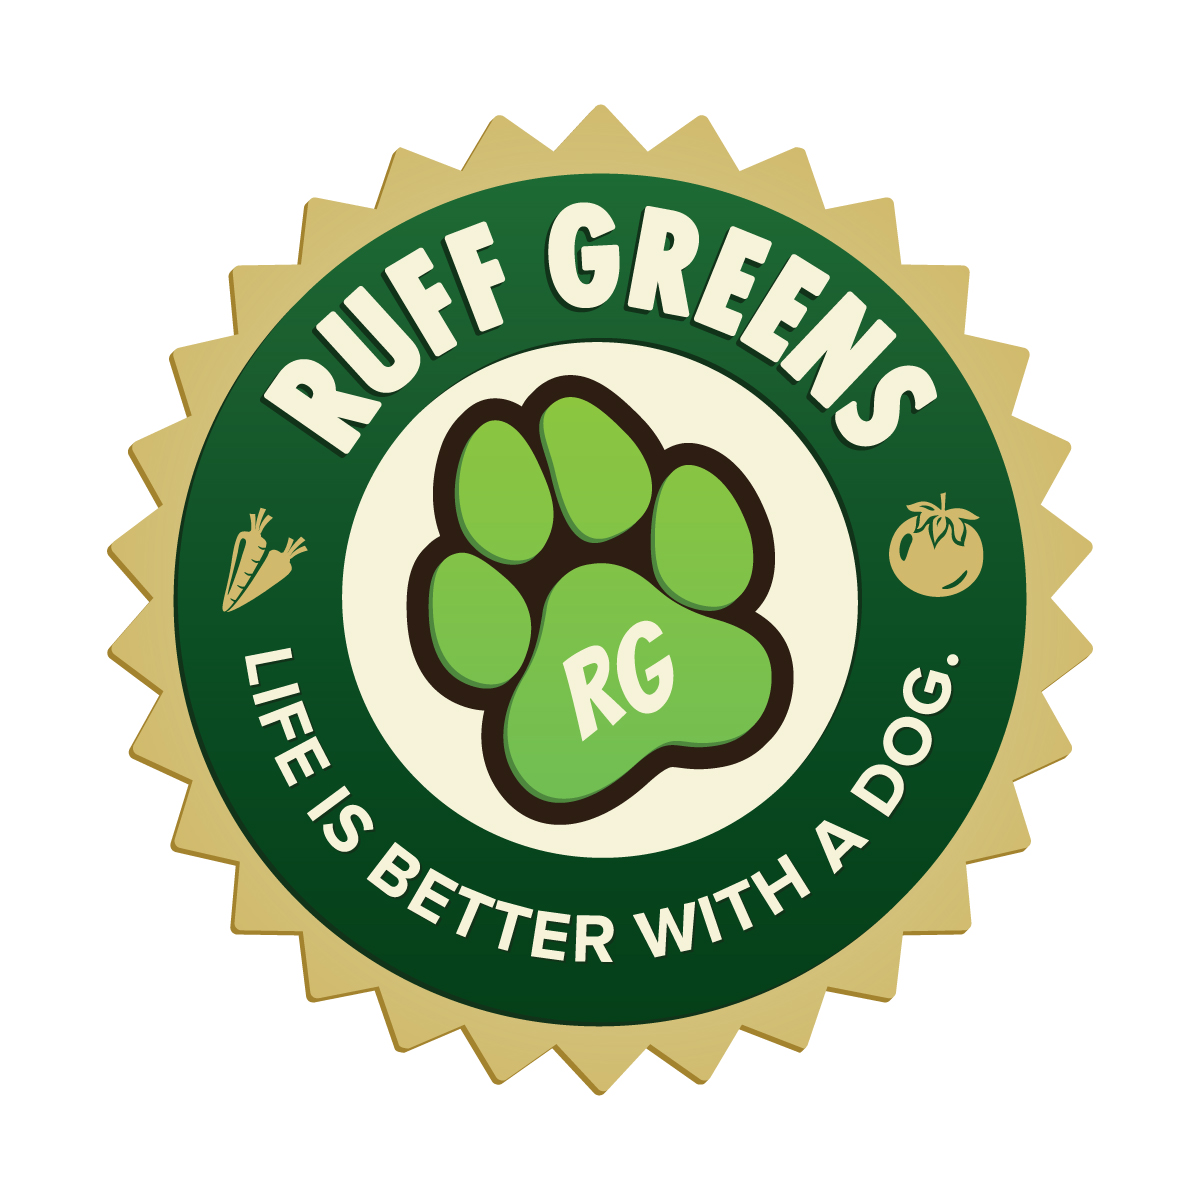 Ruff Greens (@ruff_greens) • Instagram photos and videos